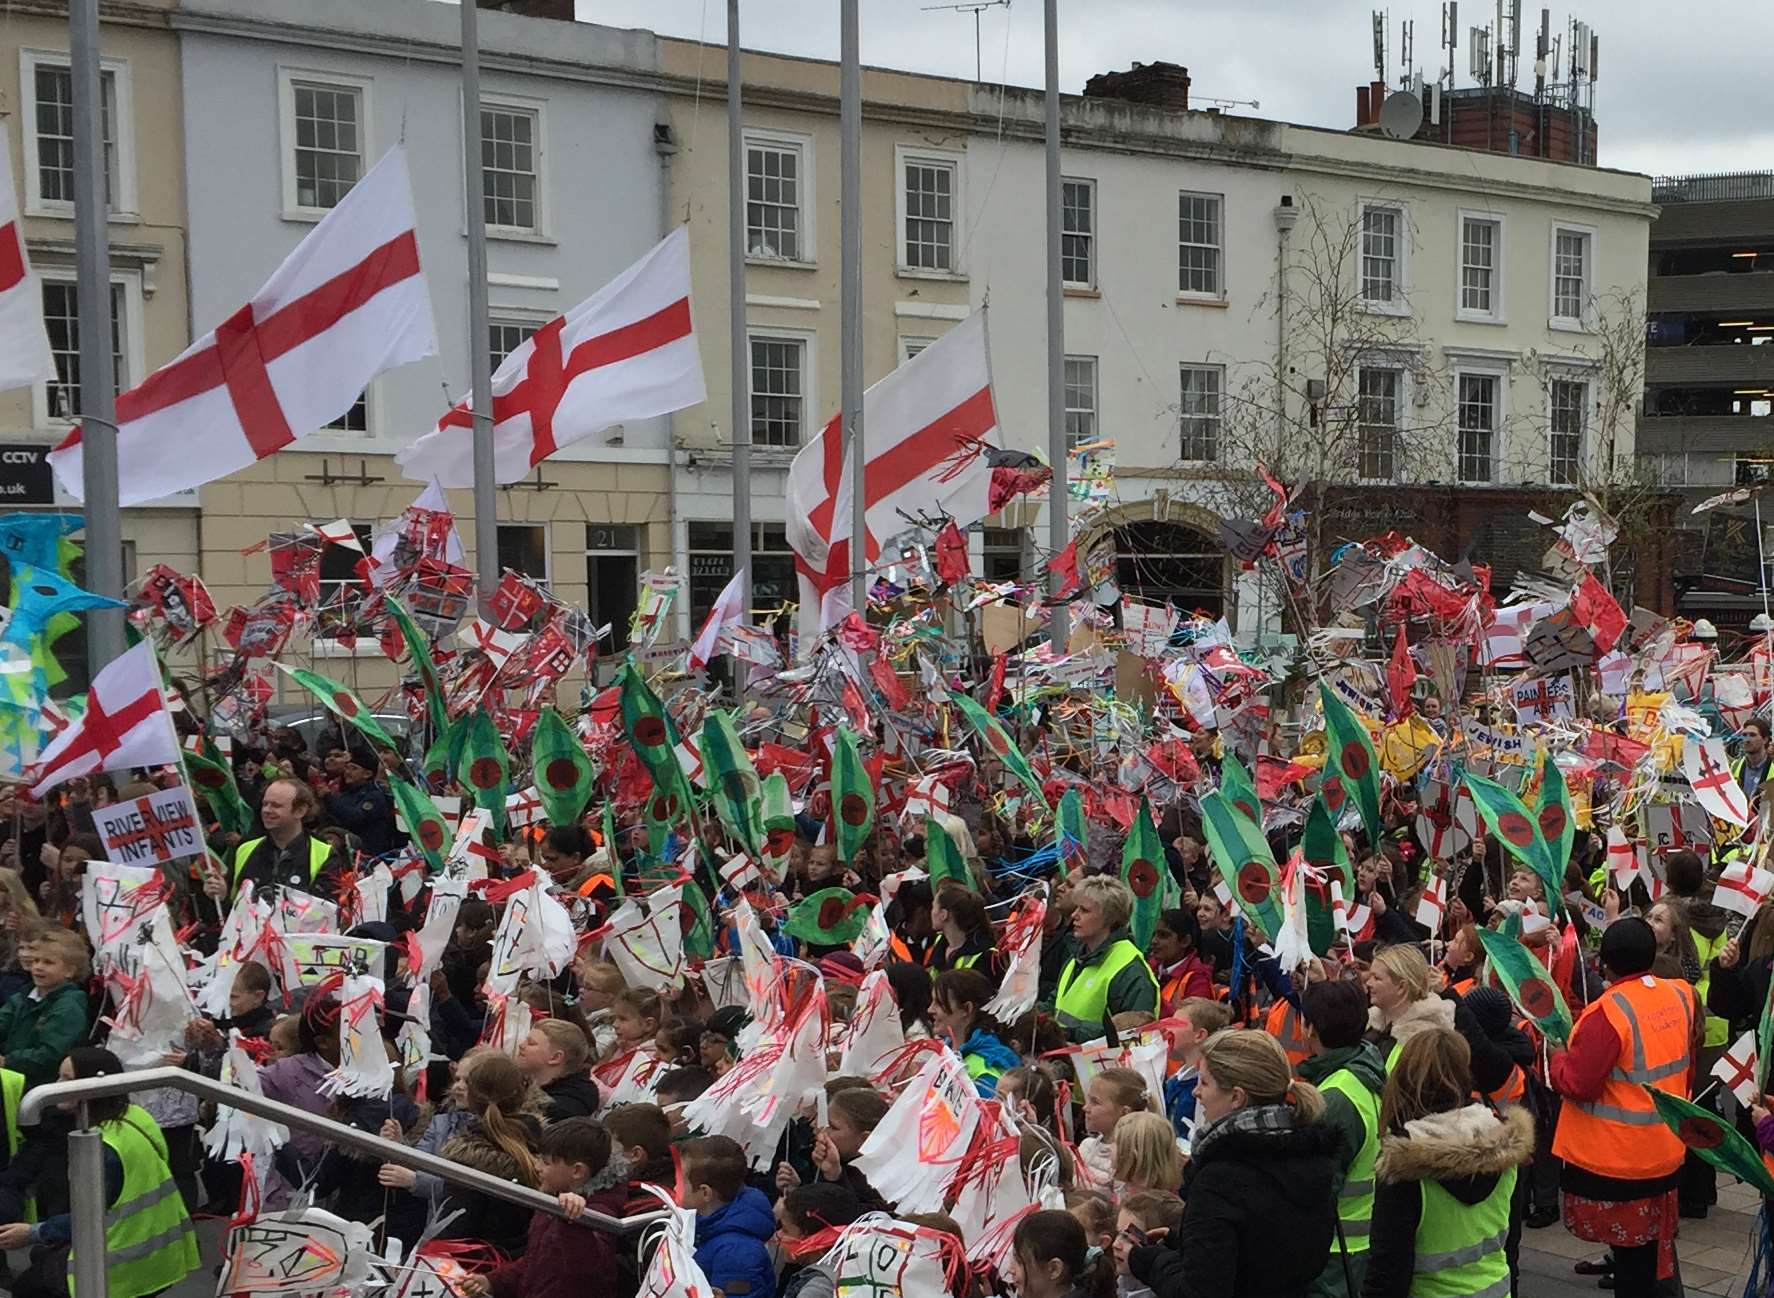 St George's Day parade through Gravesend